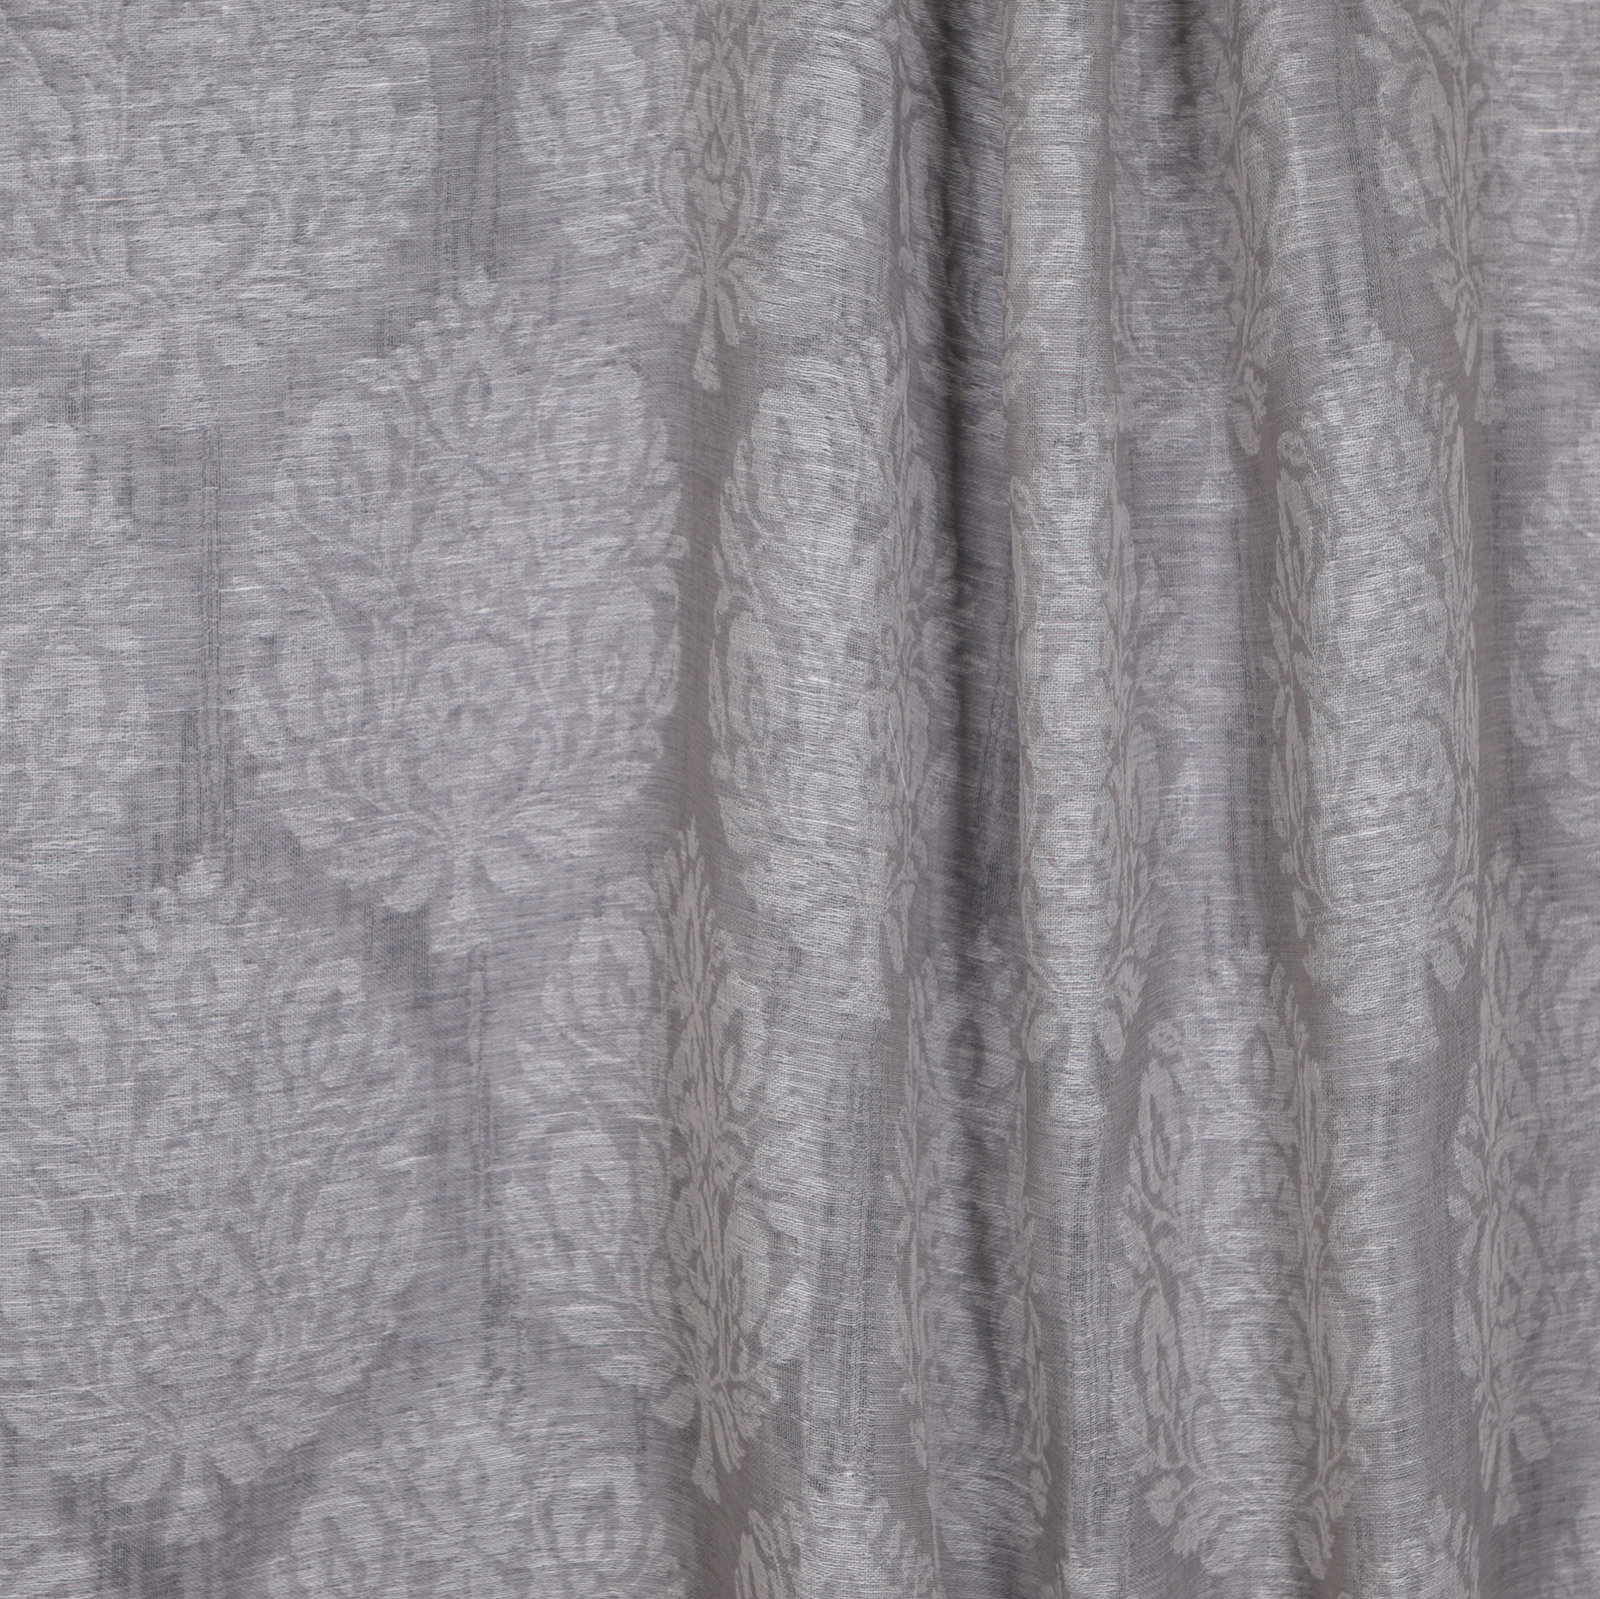 Chrome Gray Damask Sheer Upholstery Fabric